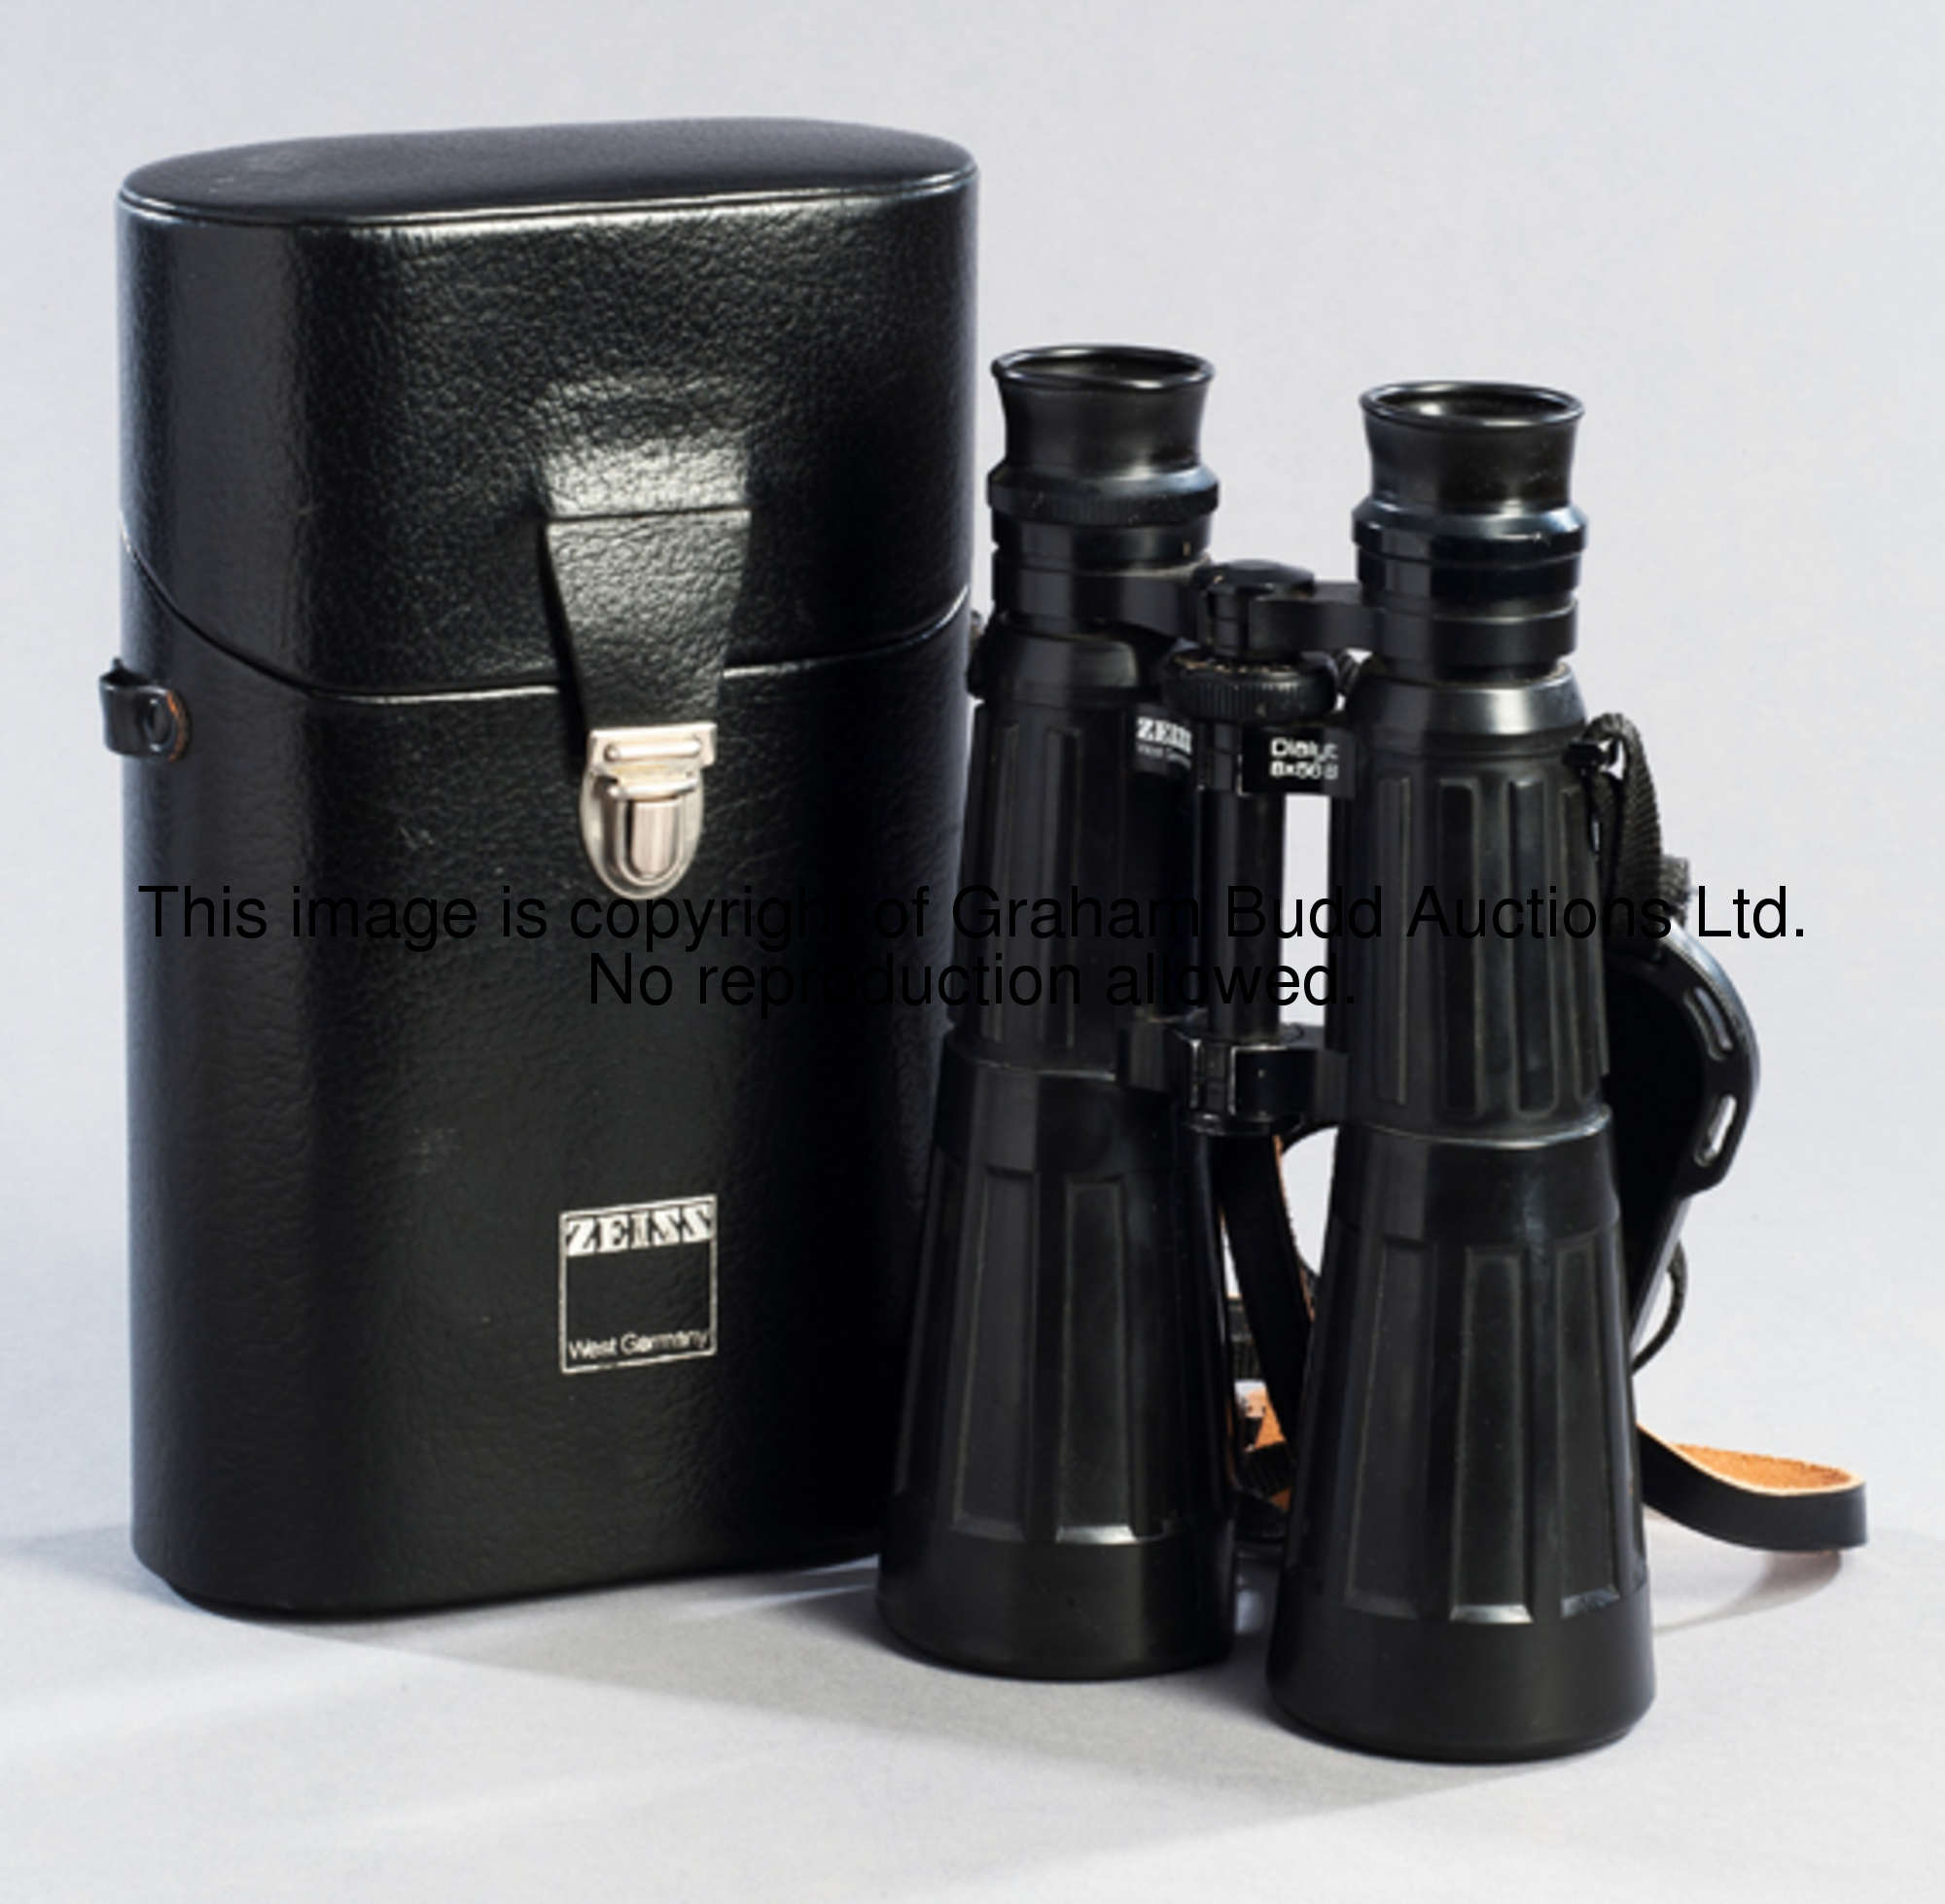 A cased pair of Carl Zeiss Dialyt 8x56 sportsman's binoculars